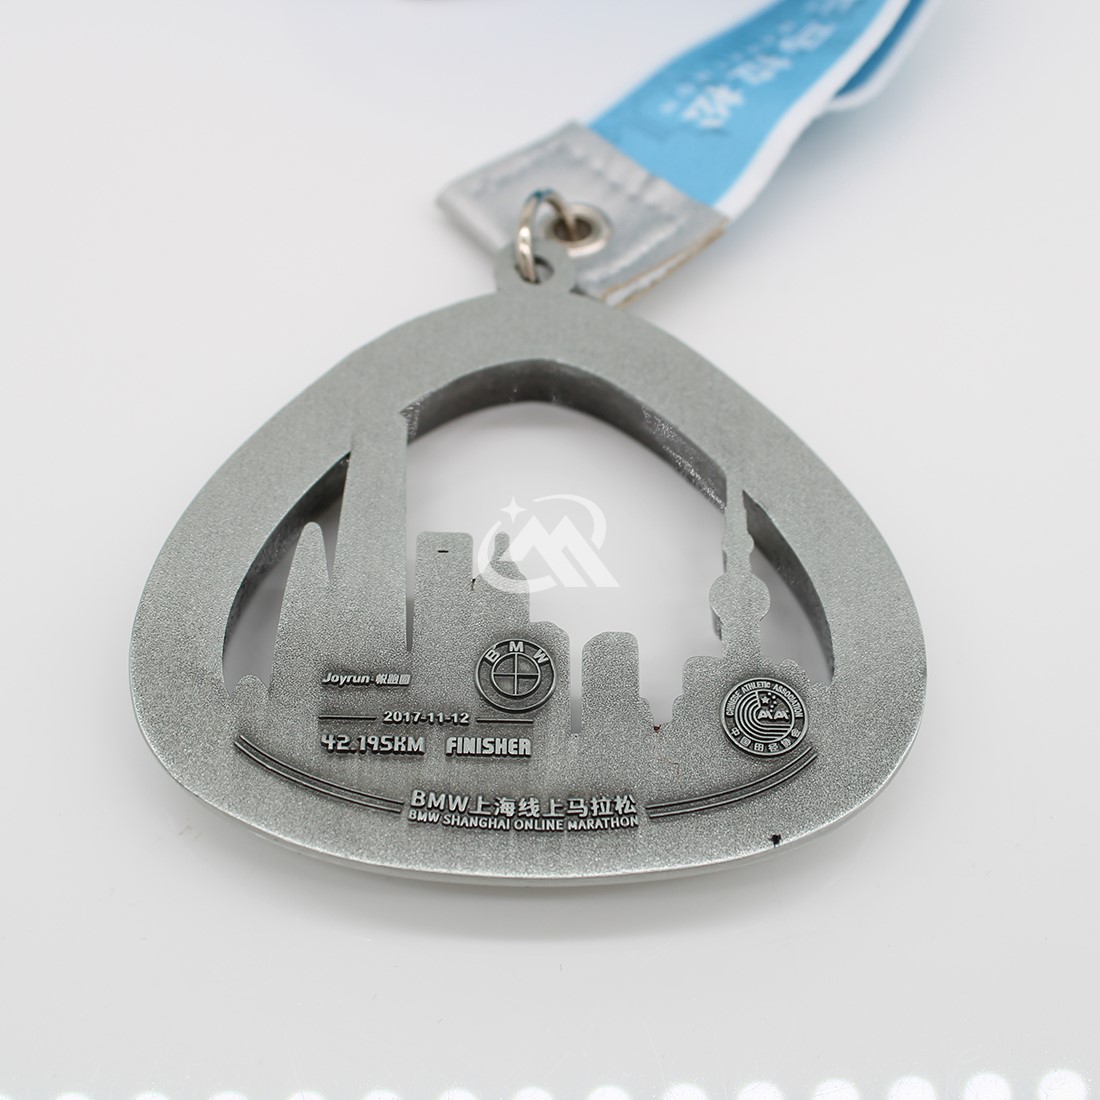 Custom Online Marathon 3D Cut out Medals